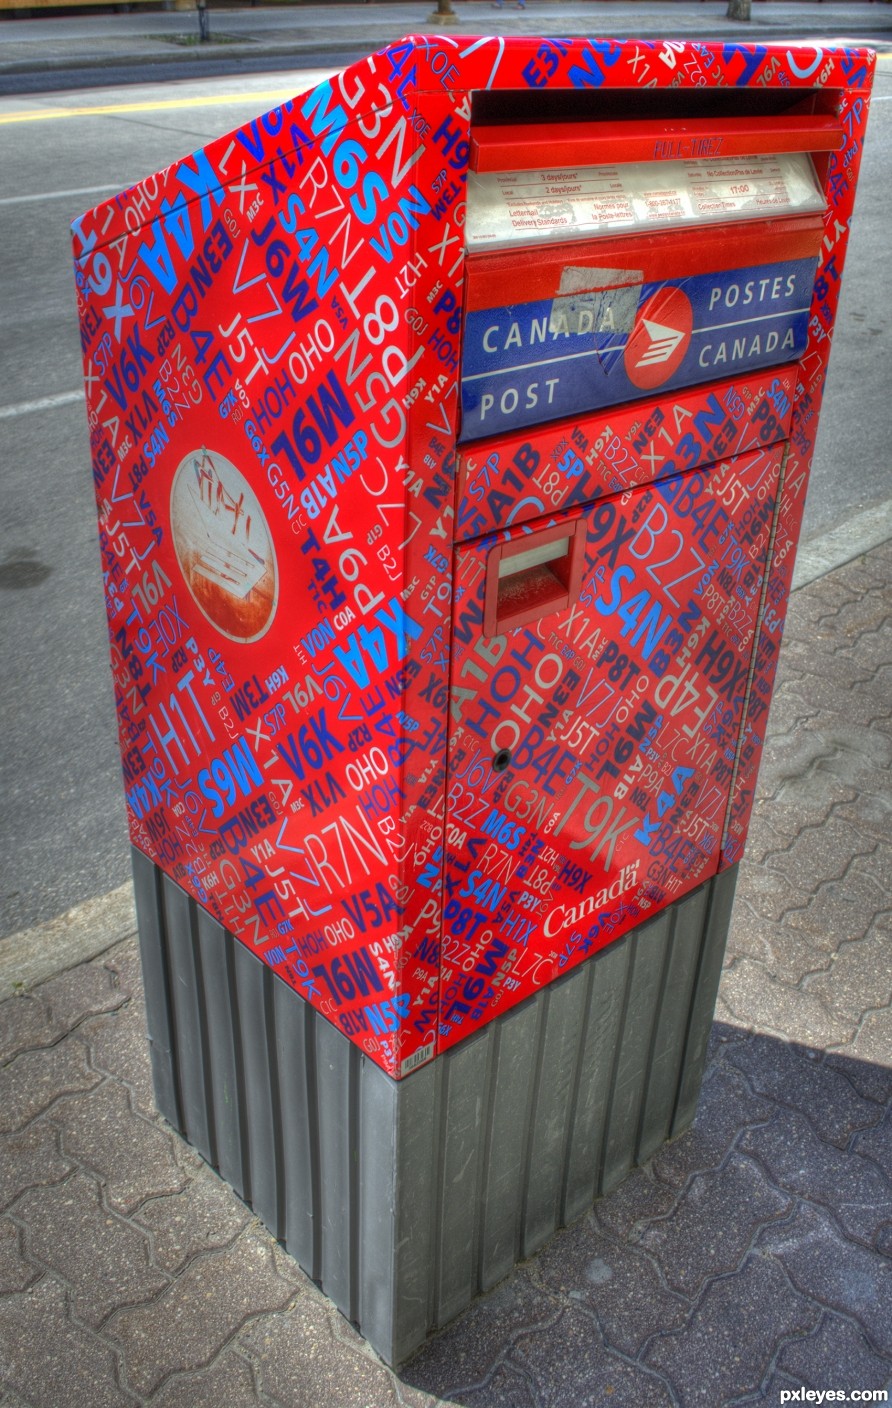 Red Mailbox